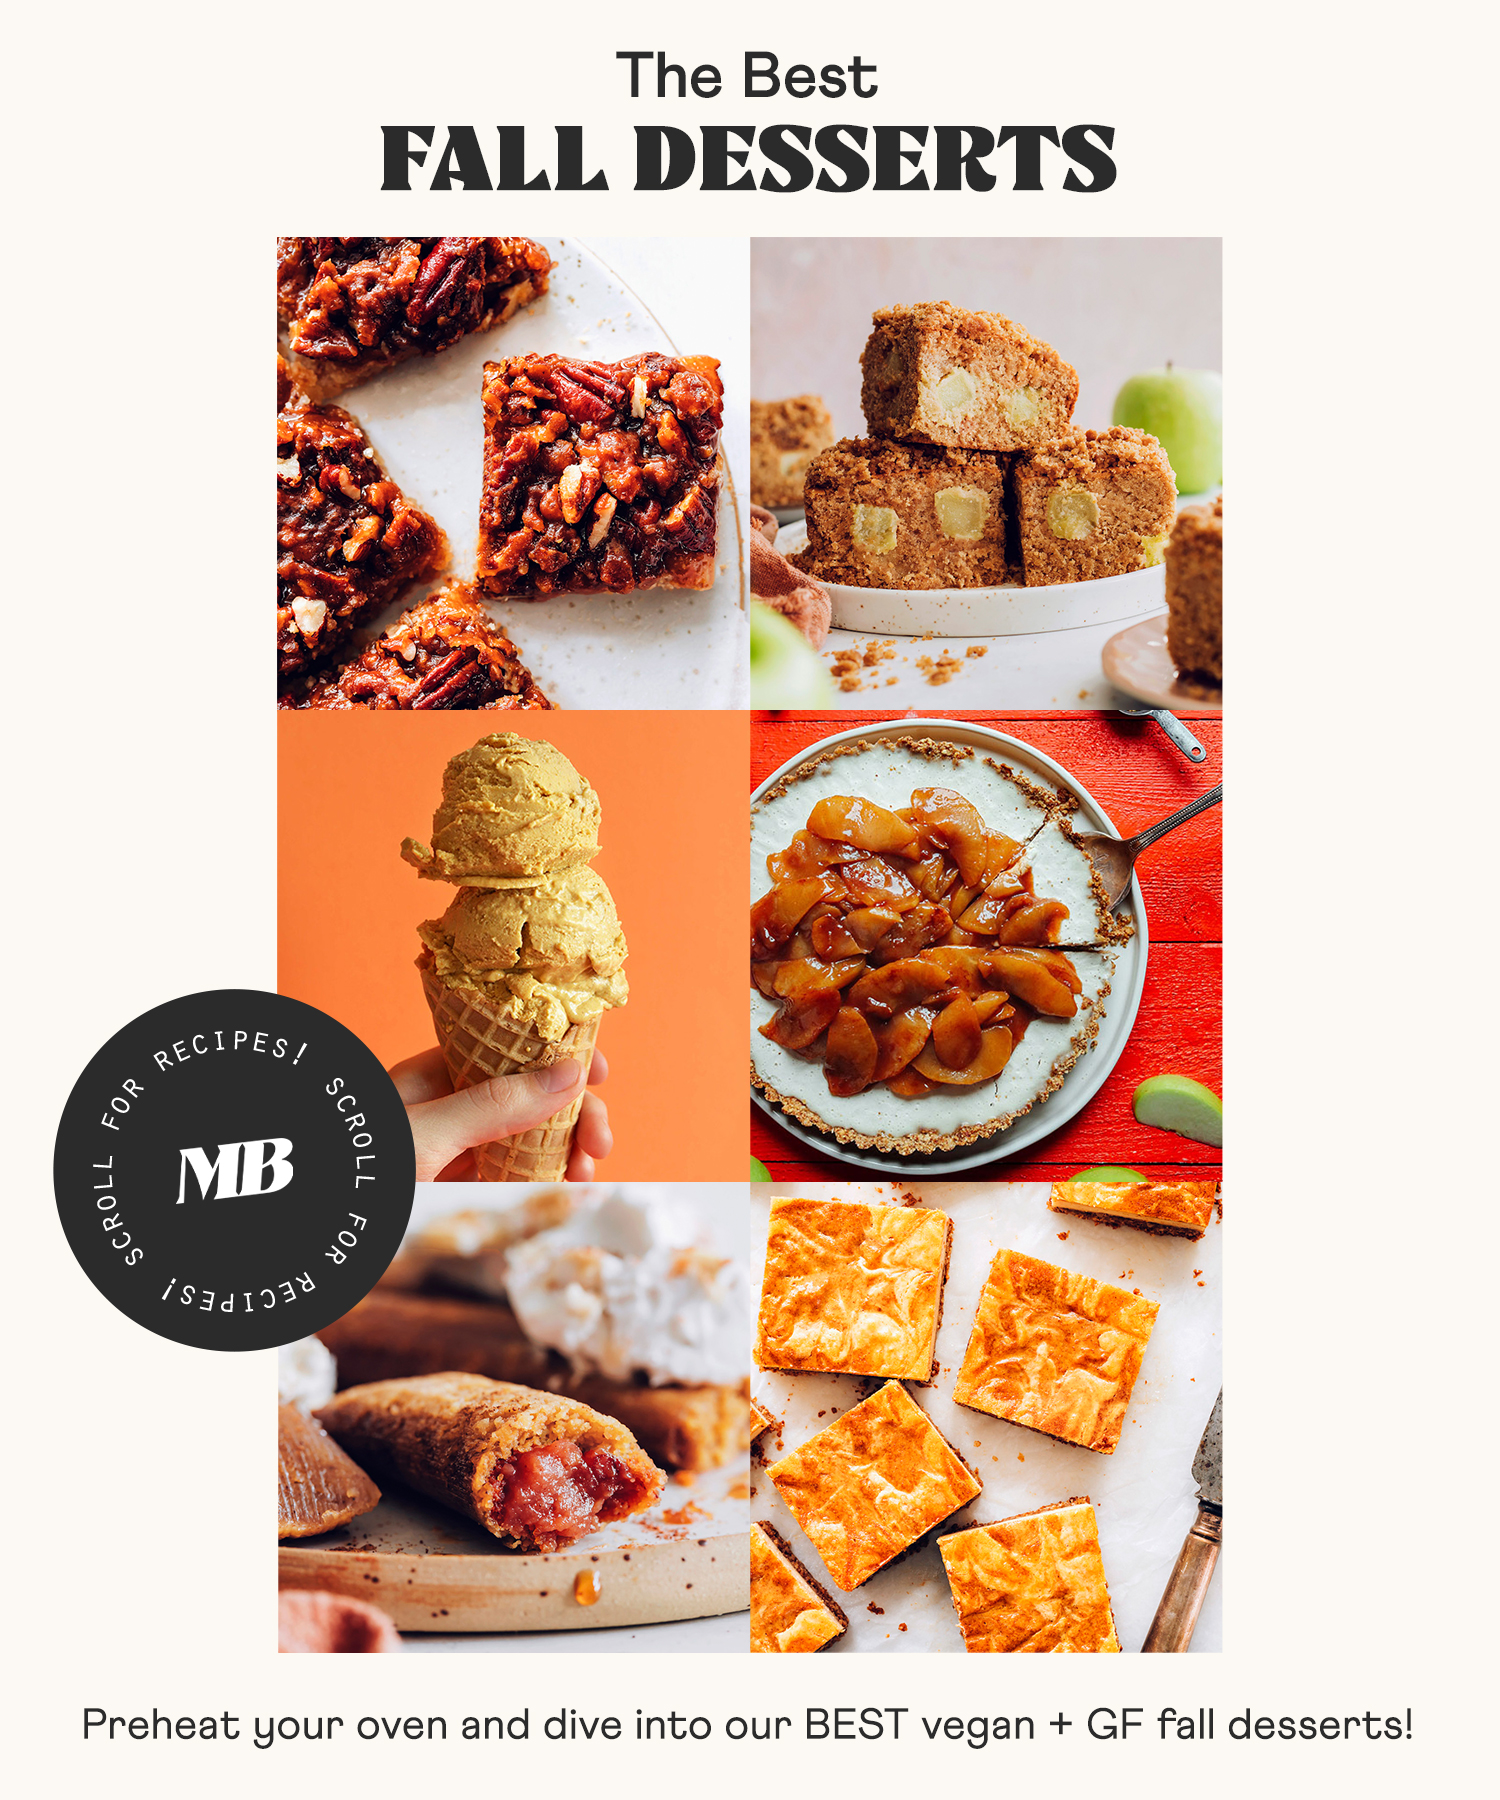 Assortment of the best fall desserts